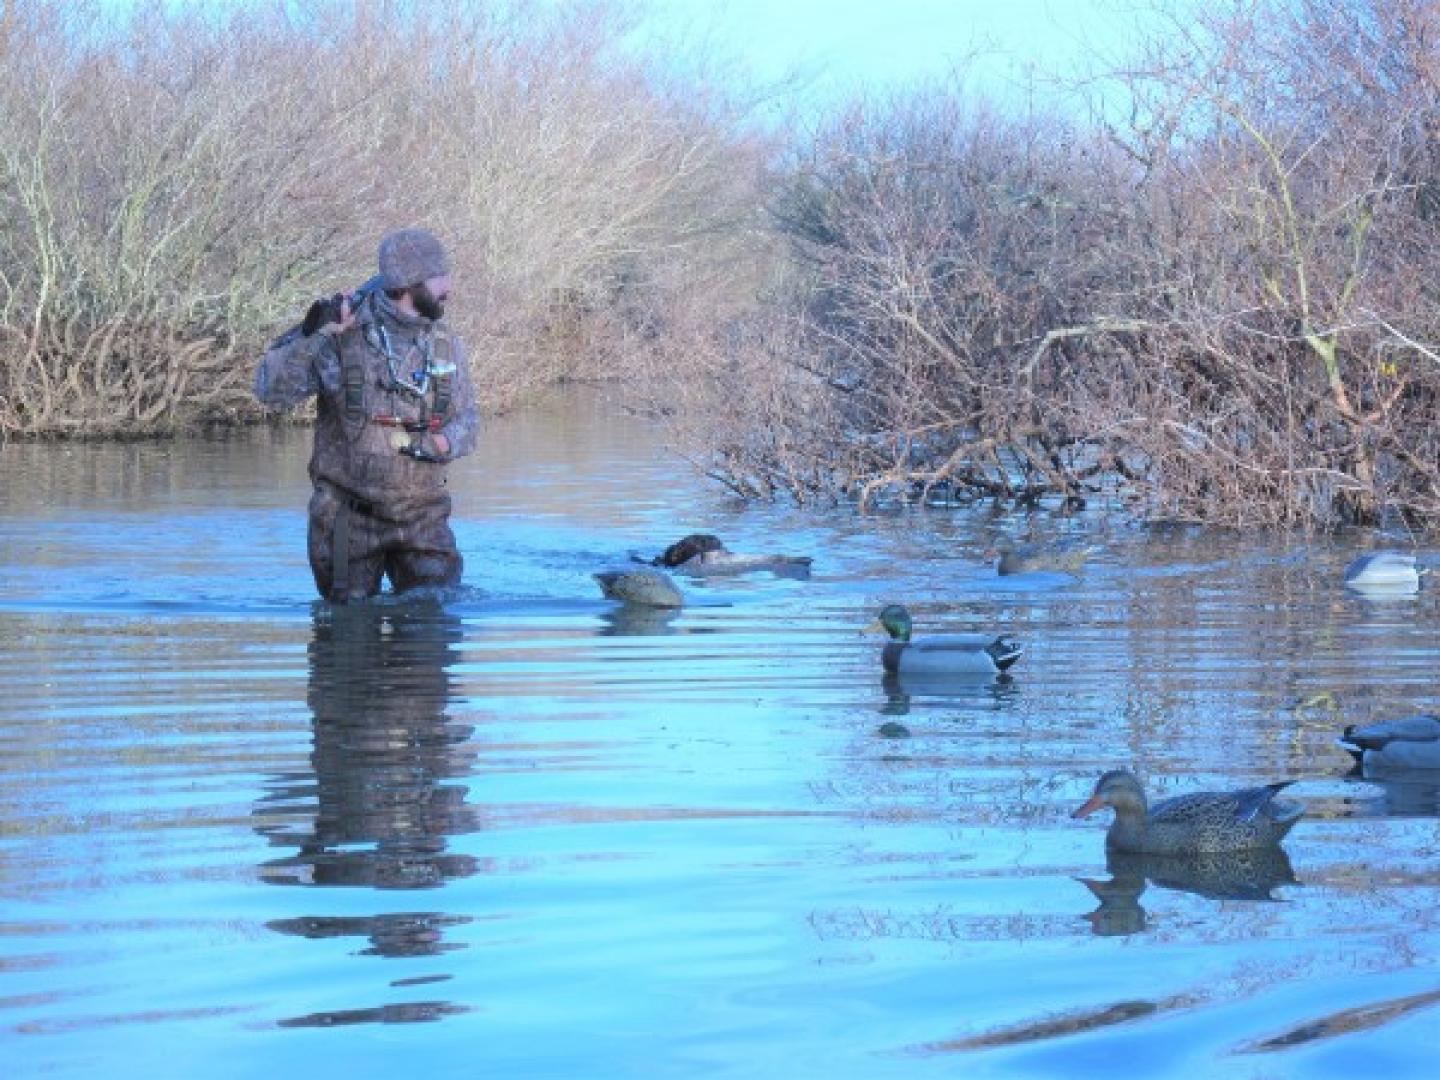 Hunter wading through shallow water while ducks swim. DRYSHOD MUDCAT WORK BOOTS